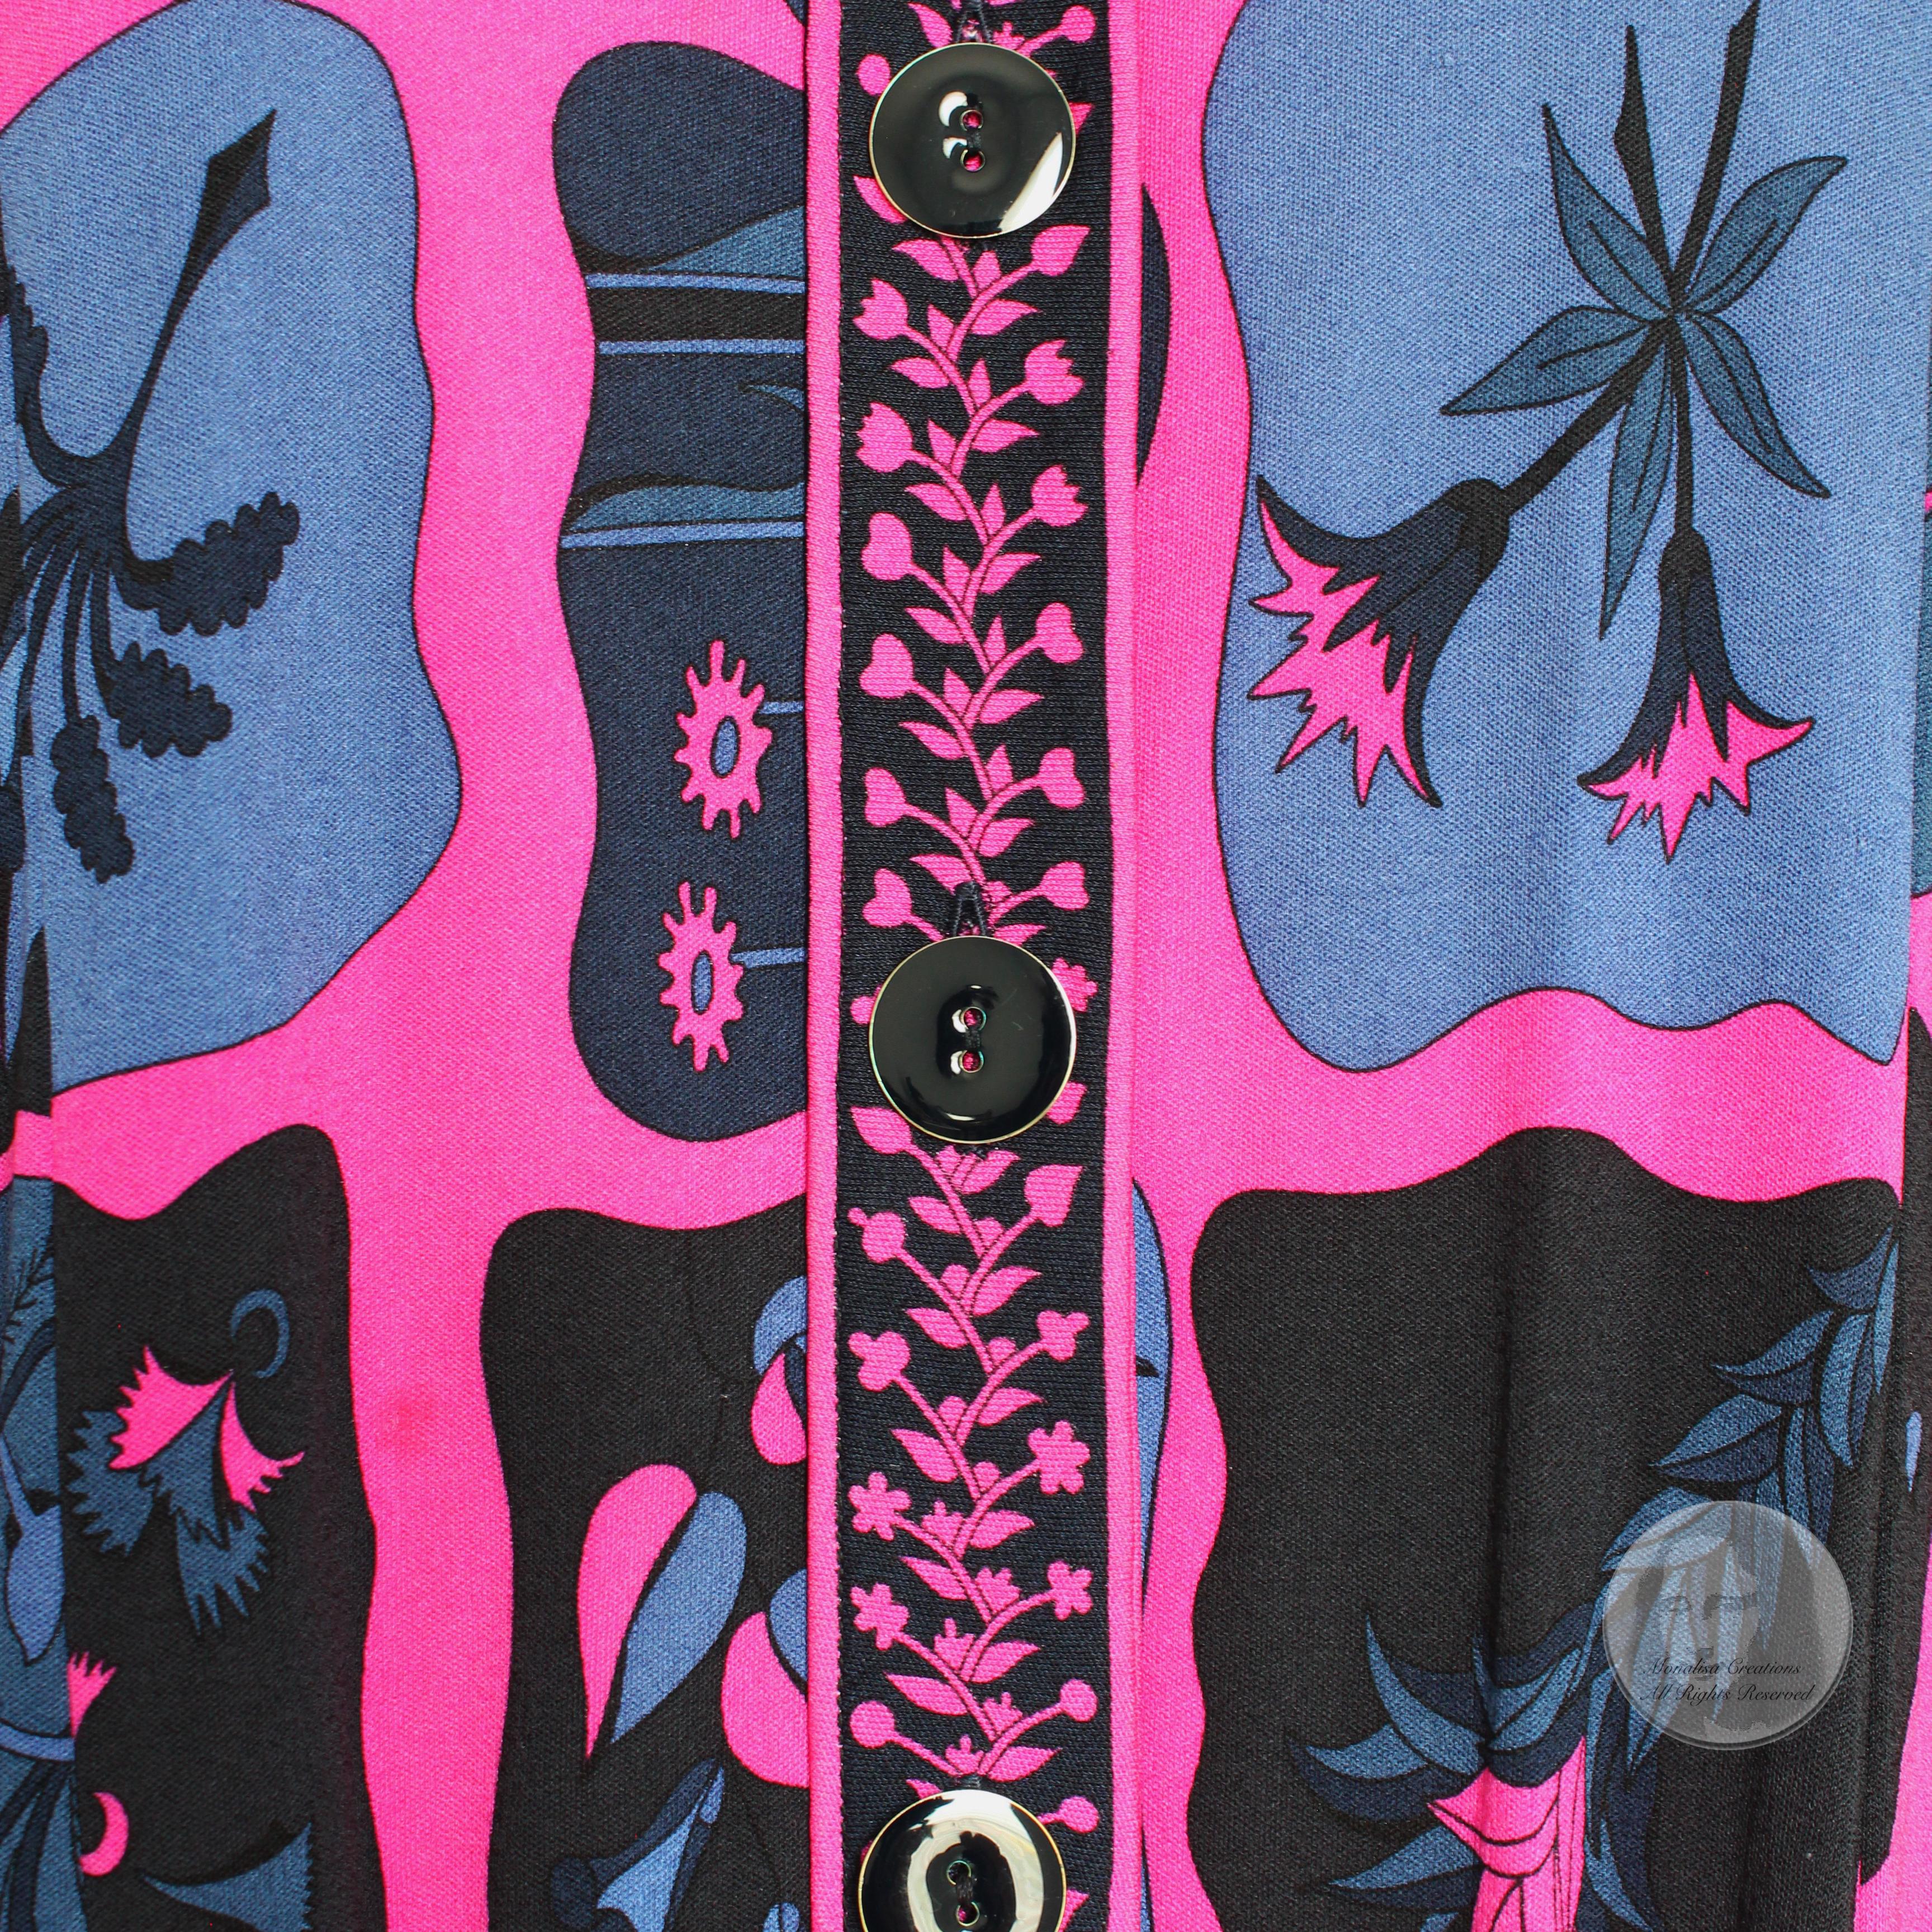 Women's or Men's Averardo Bessi Suit Top Pants Belt 3pc Silk Jersey Floral Print Size 44 Rare 90s For Sale